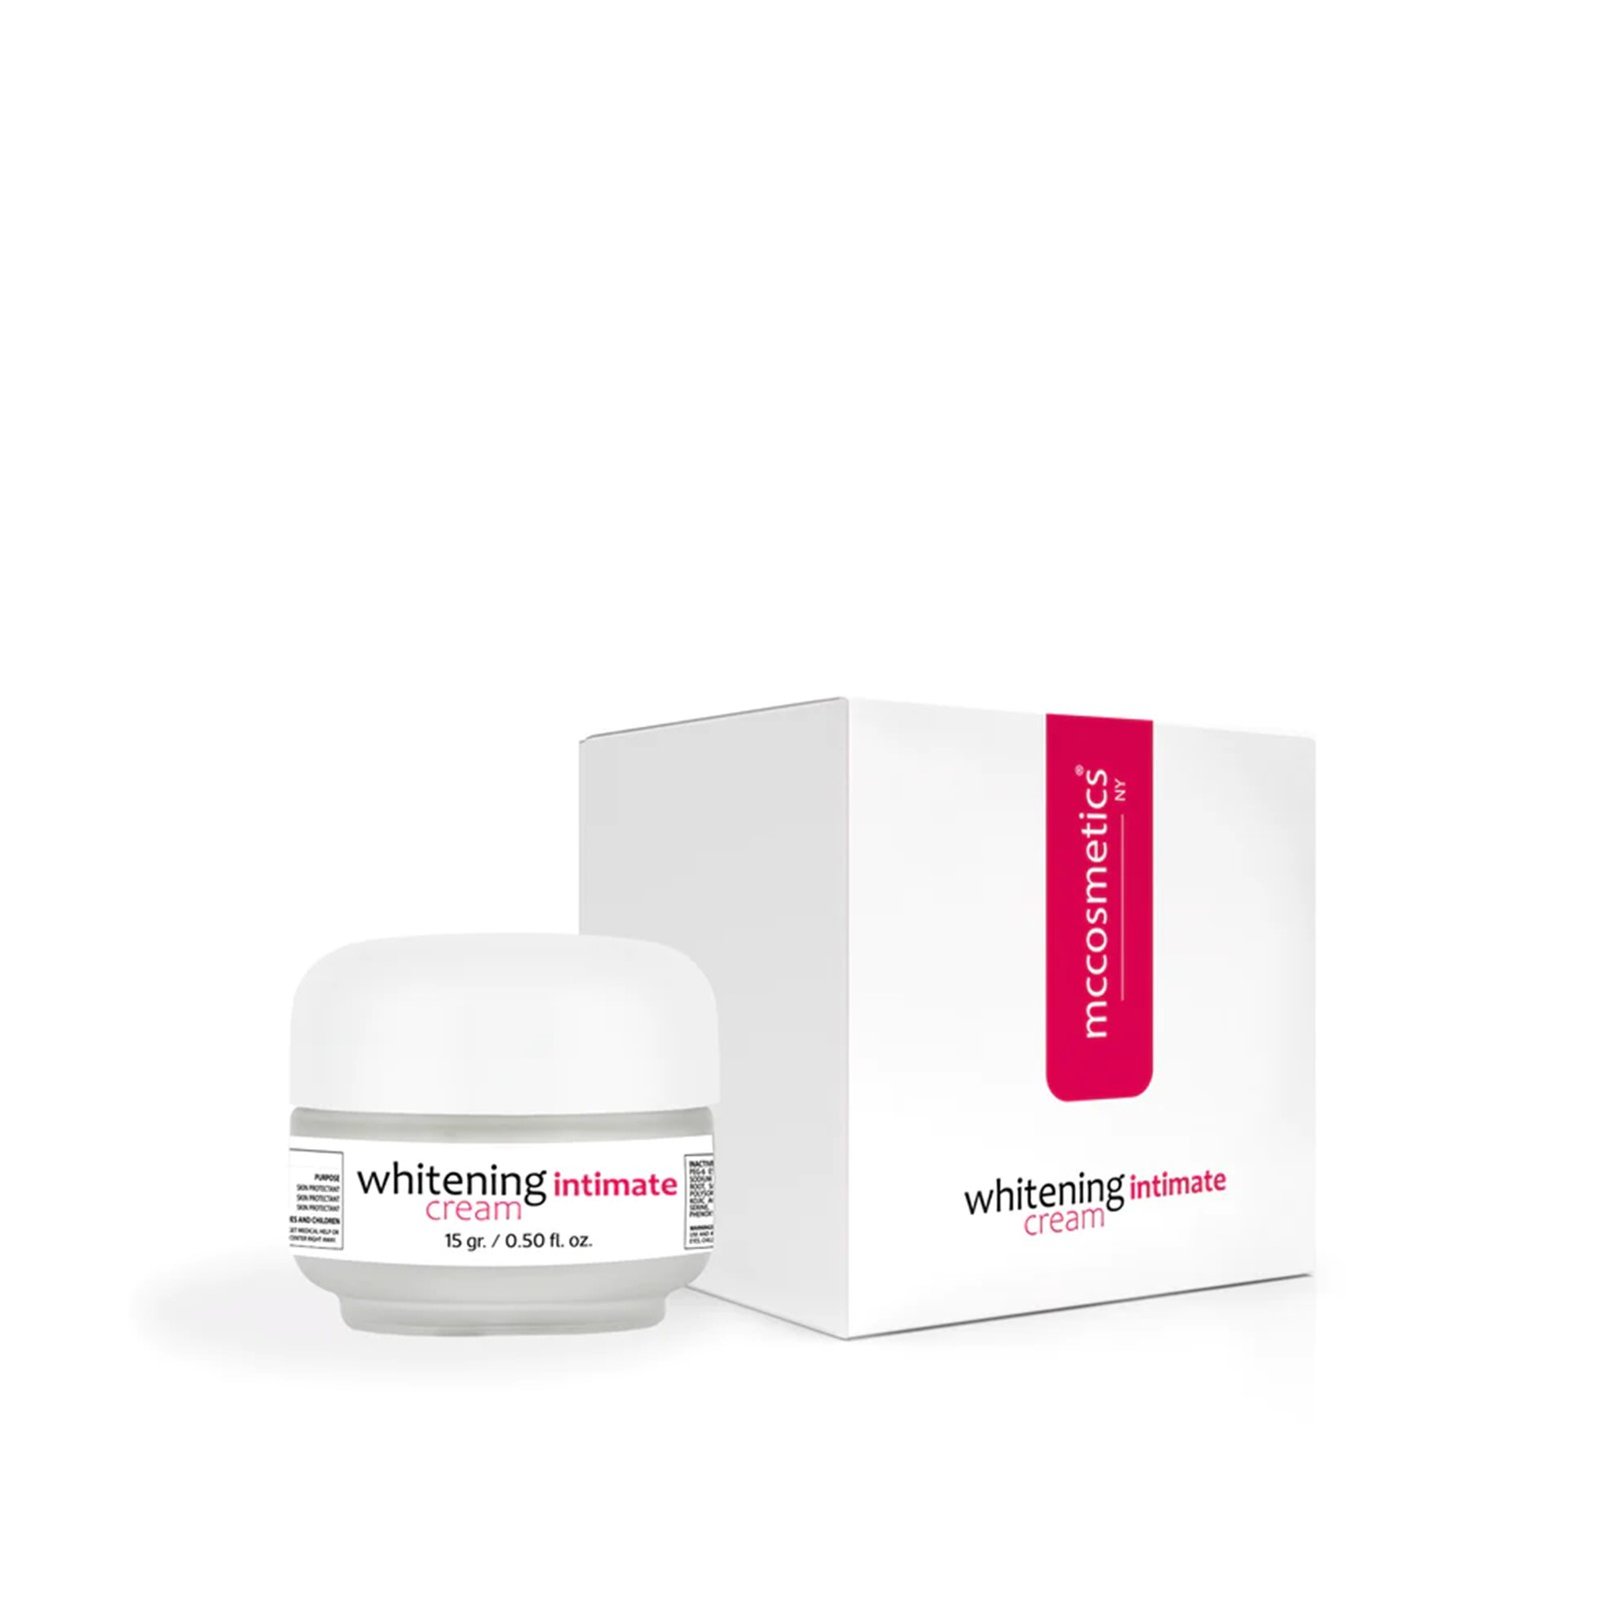 mccosmetics Whitening Intimate Cream 15g (0.50 fl oz)